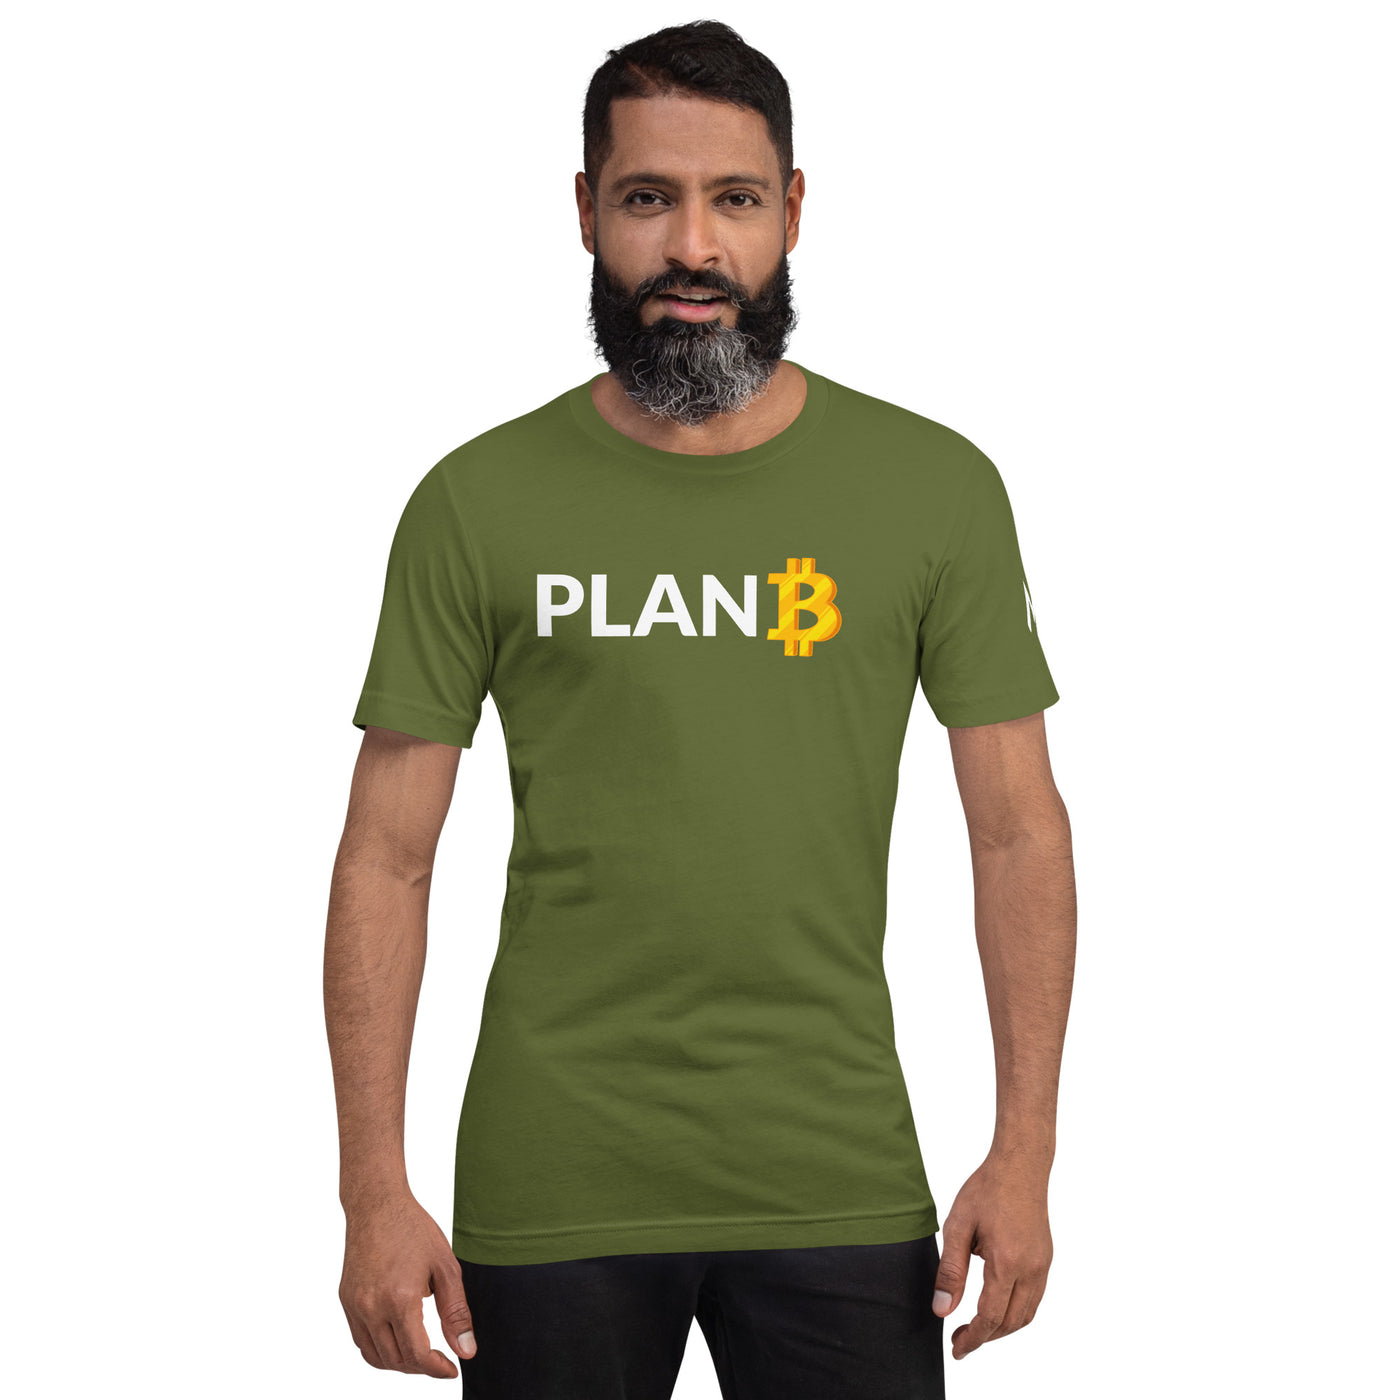 Plan B V1 - Unisex t-shirt